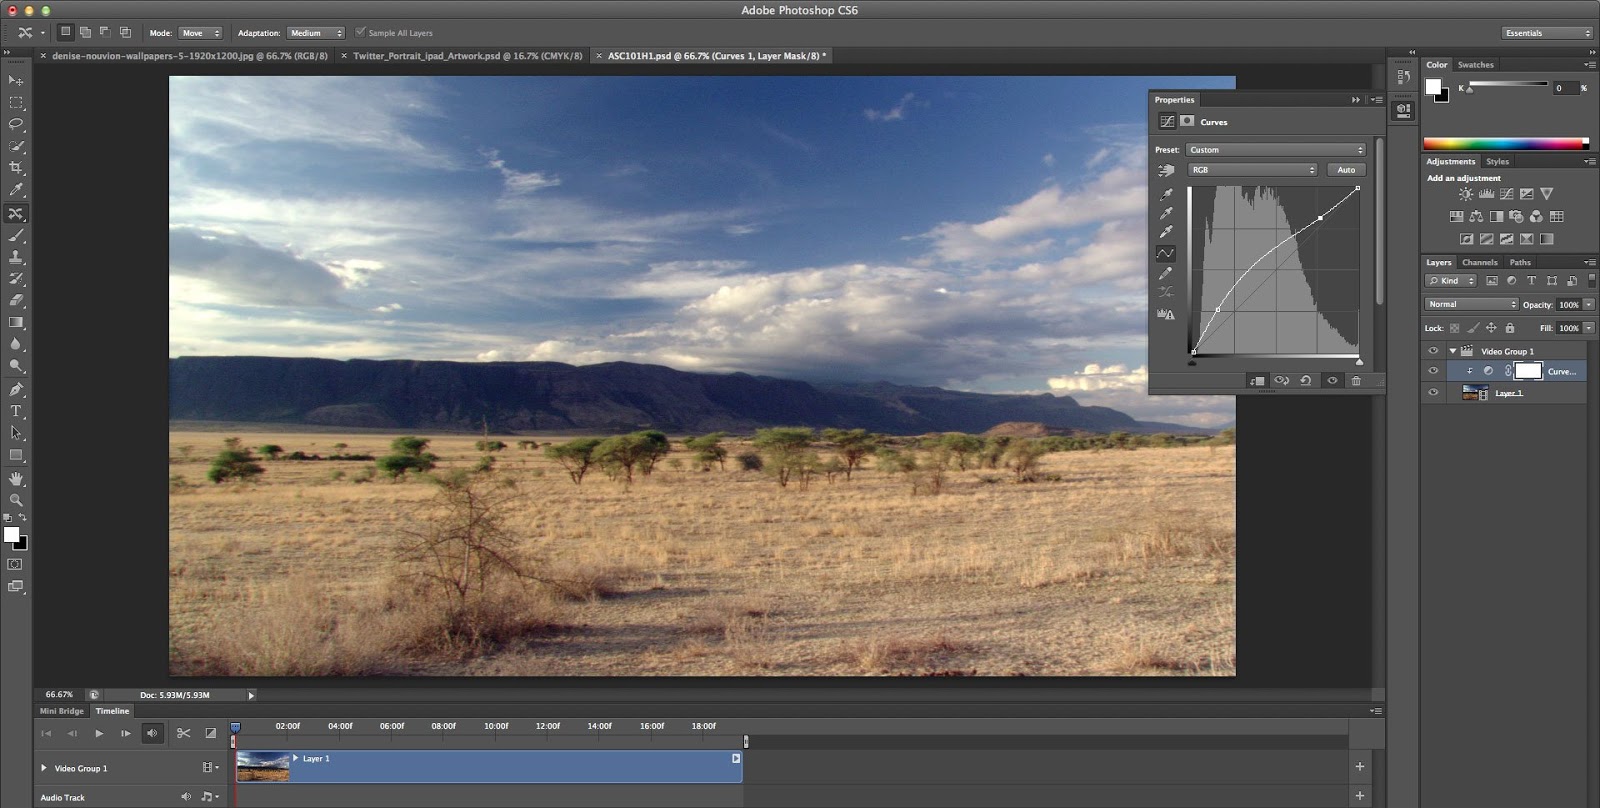 Adobe photoshop cs6 /cc setup download free